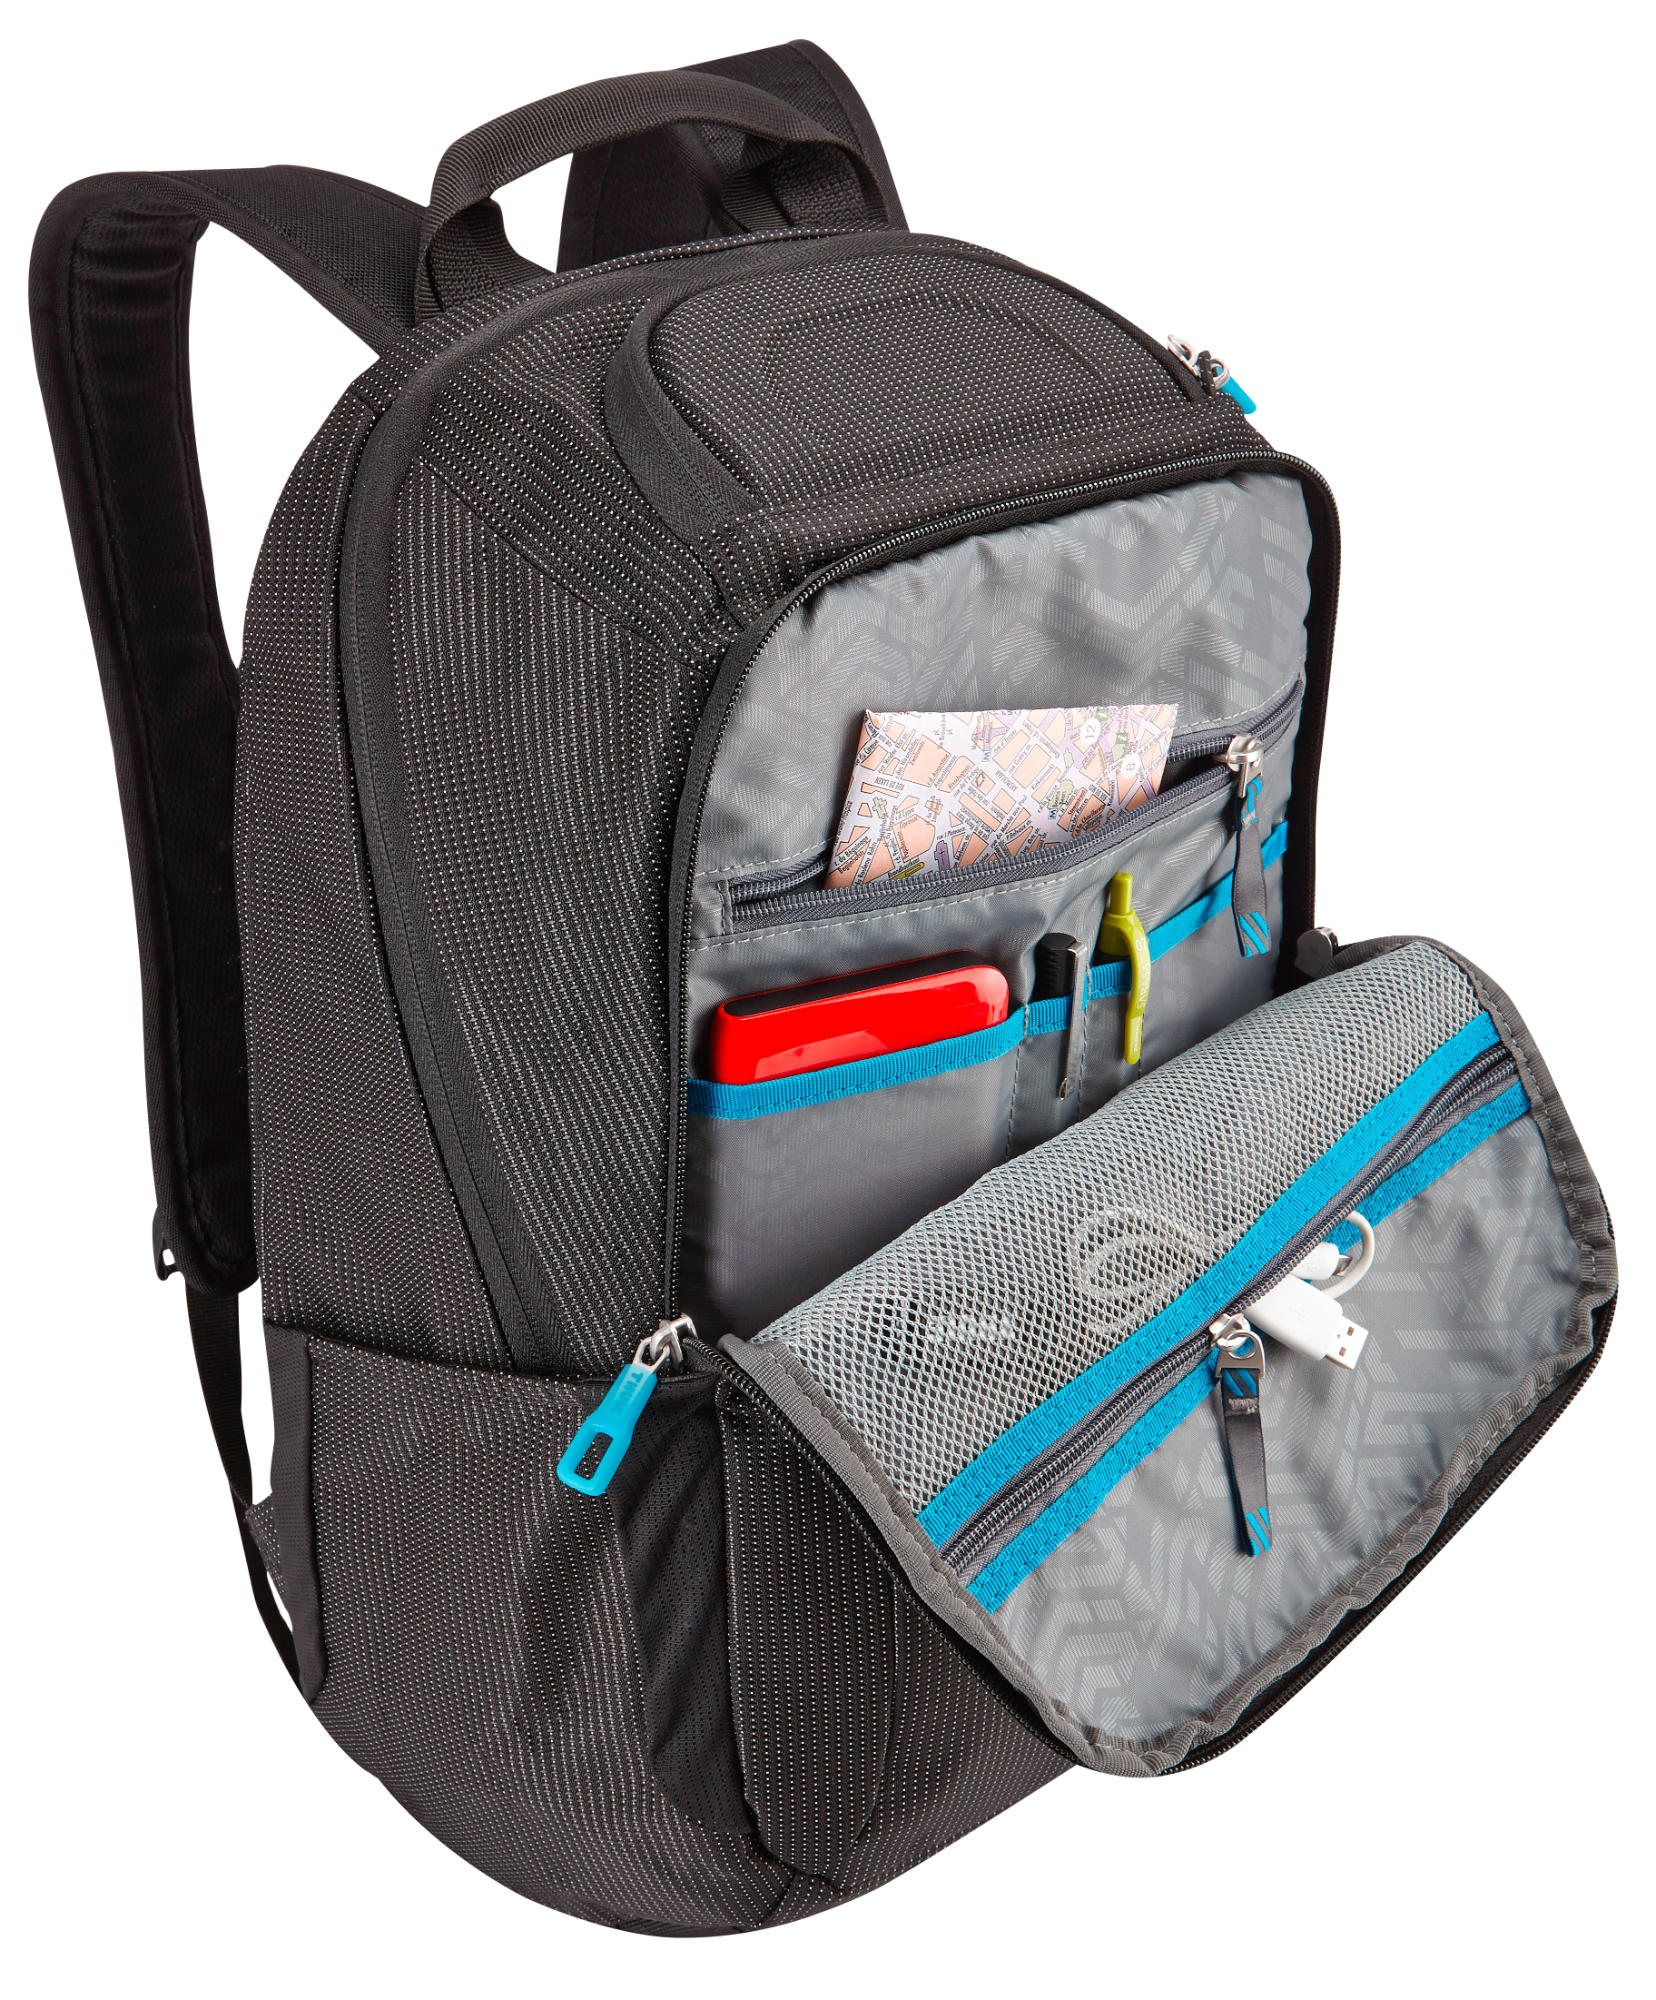 Mochila Thule Nylon backpack para 15 negro crossover tipo casual 47 centimeters black 381 cm azul de pulgadas logic tcbp317k 25l 17 4318